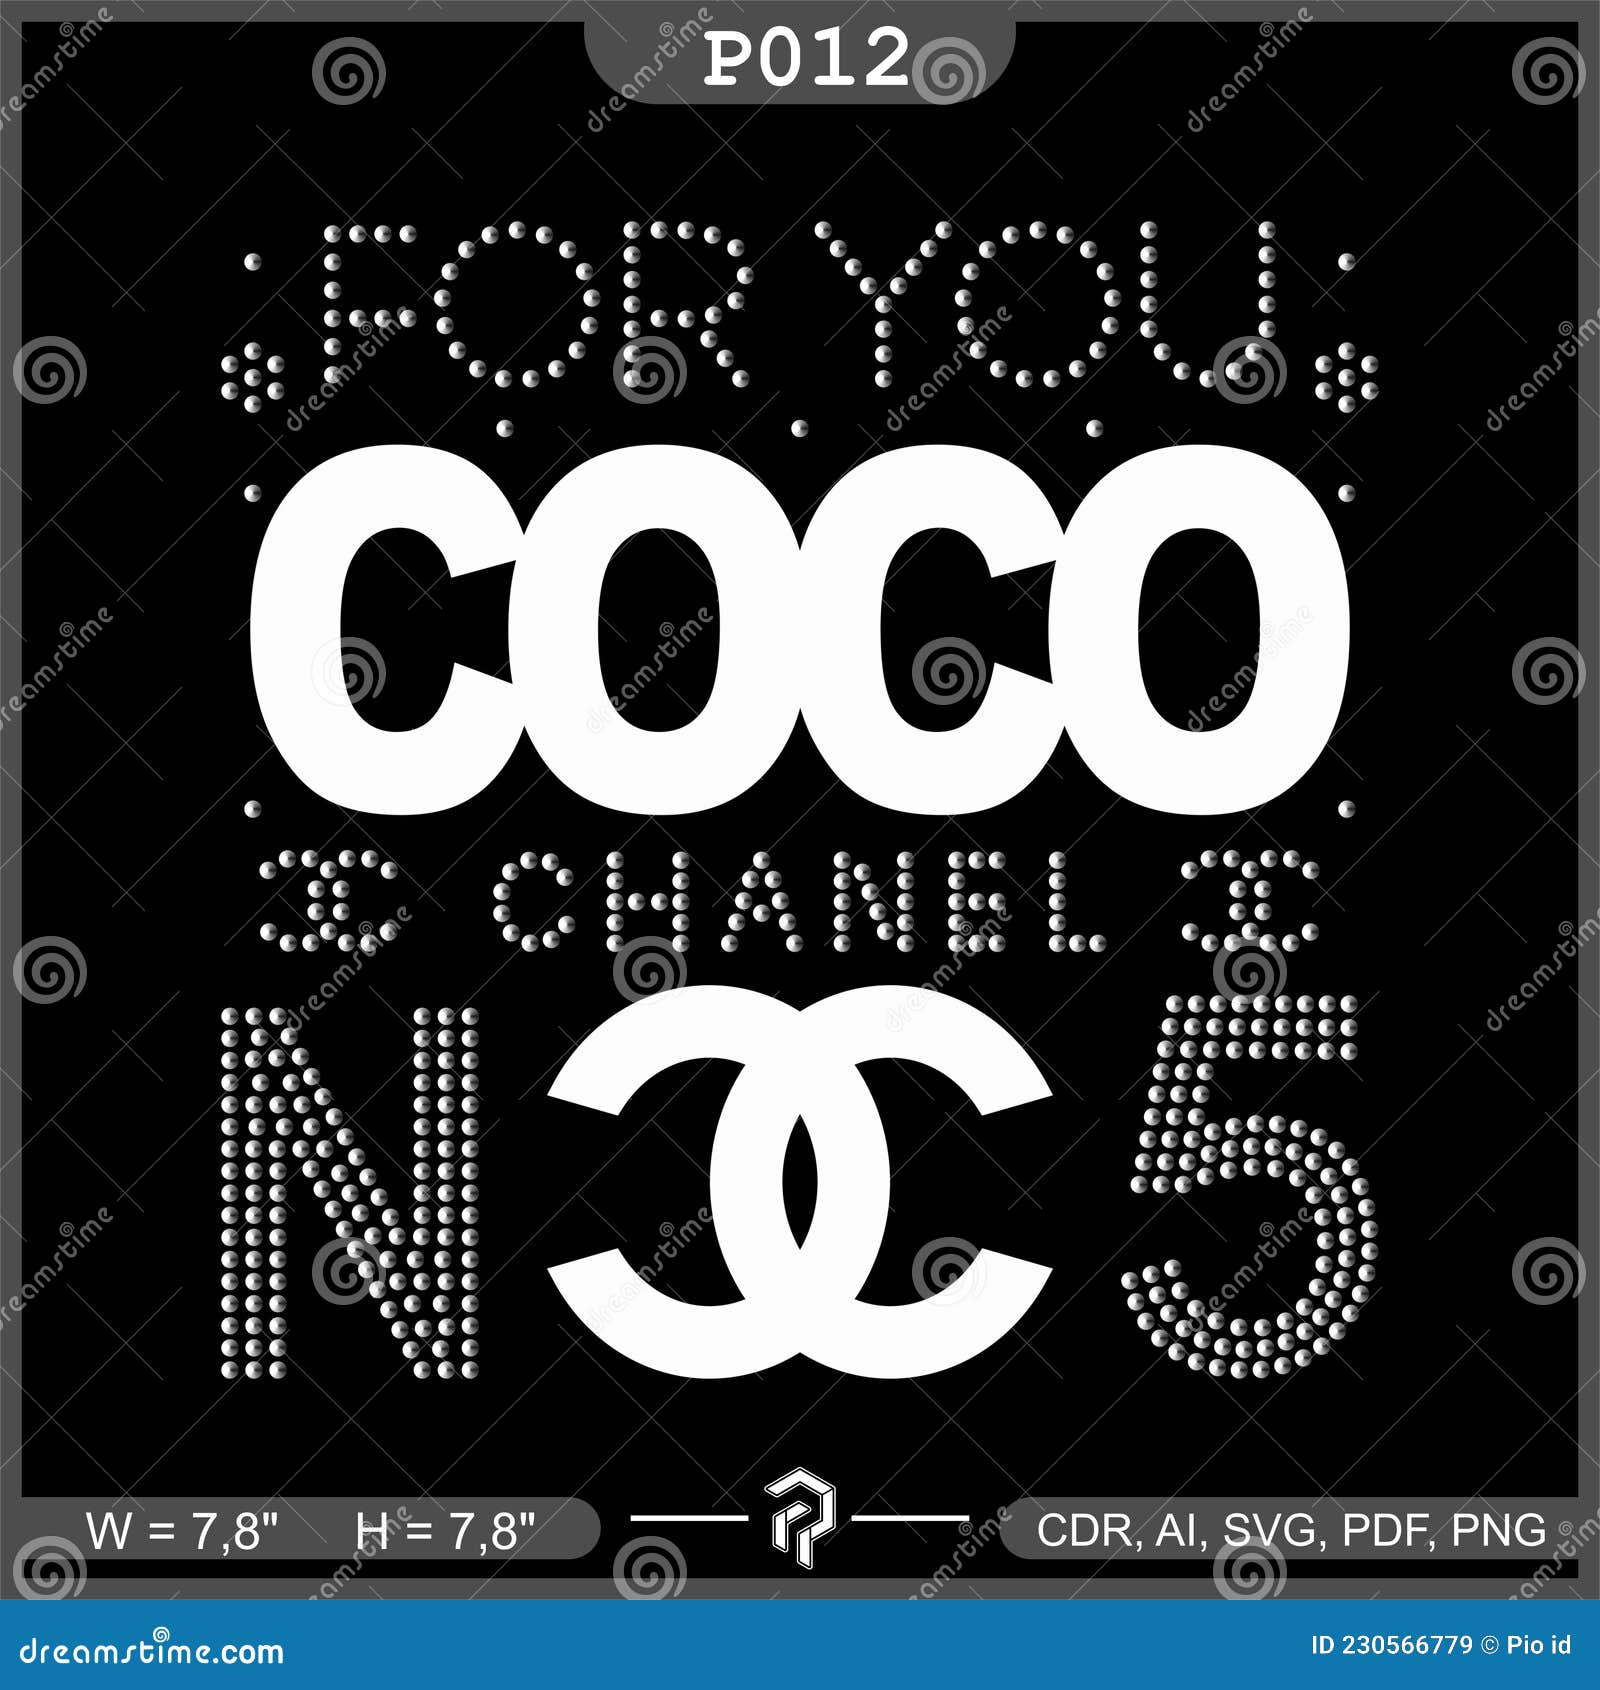 DPMA  Coco Chanel